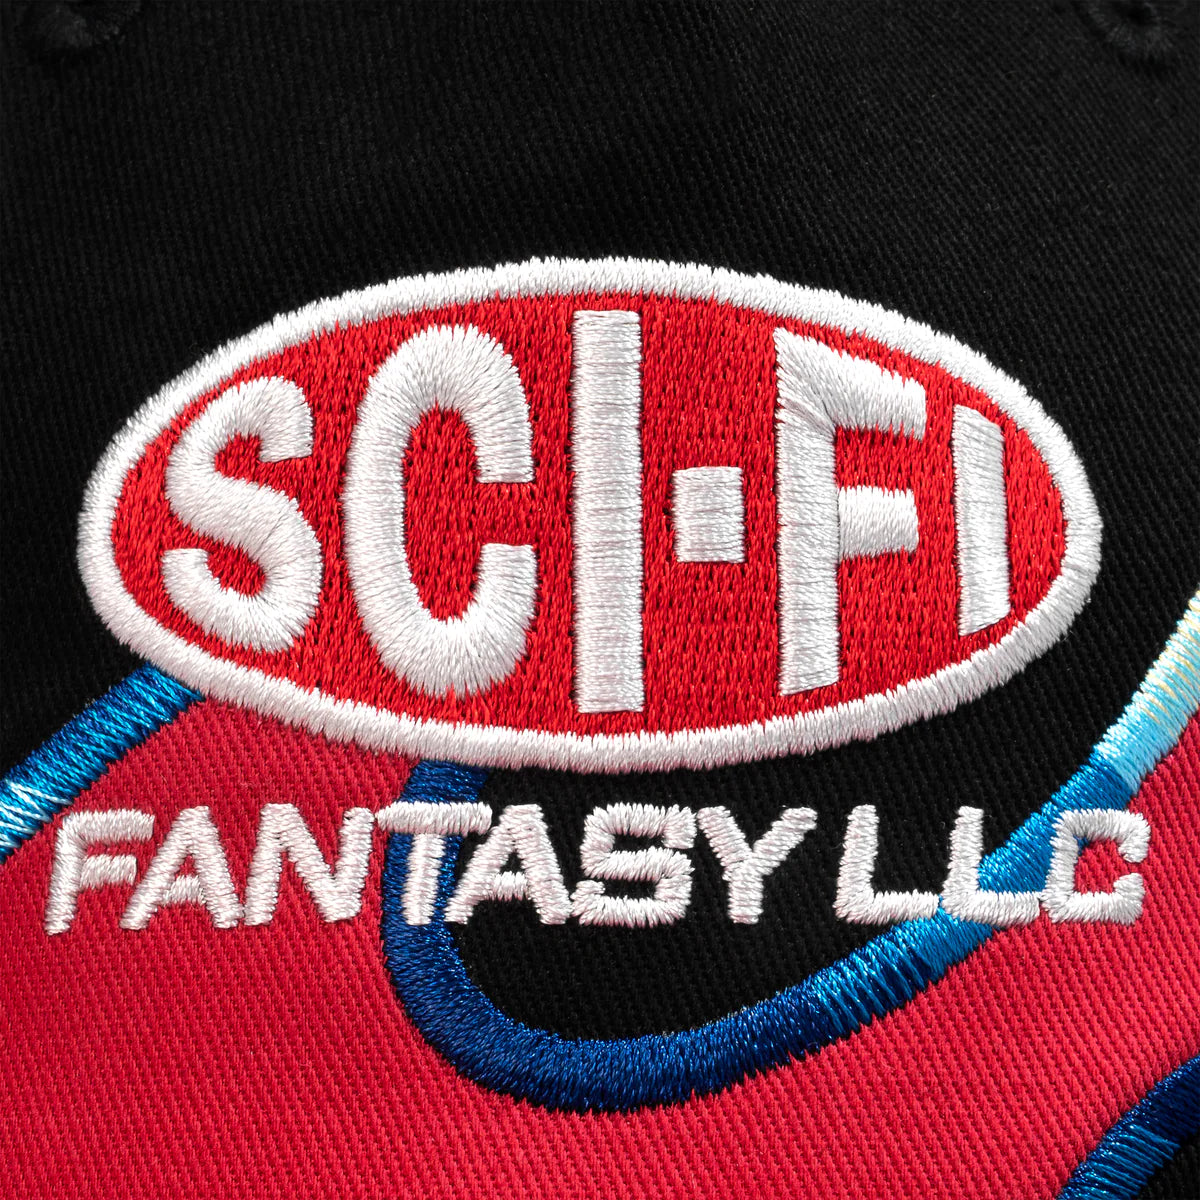 SCI-FI FANTASY - Flame LLC Cap Black